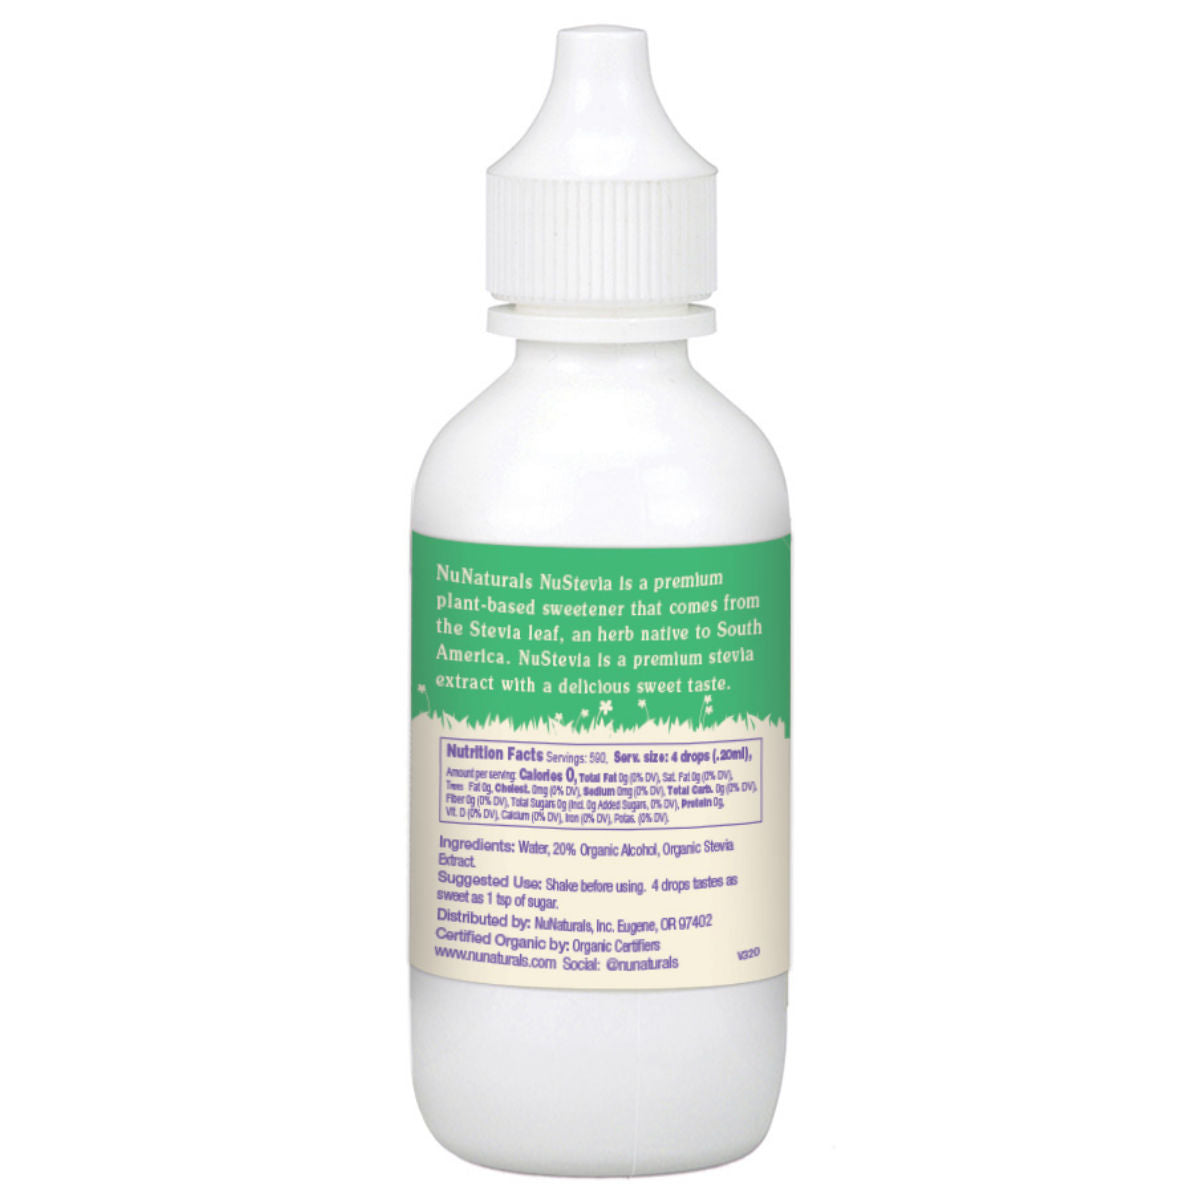 4 oz. NuNaturals Organic Clear Stevia Extract